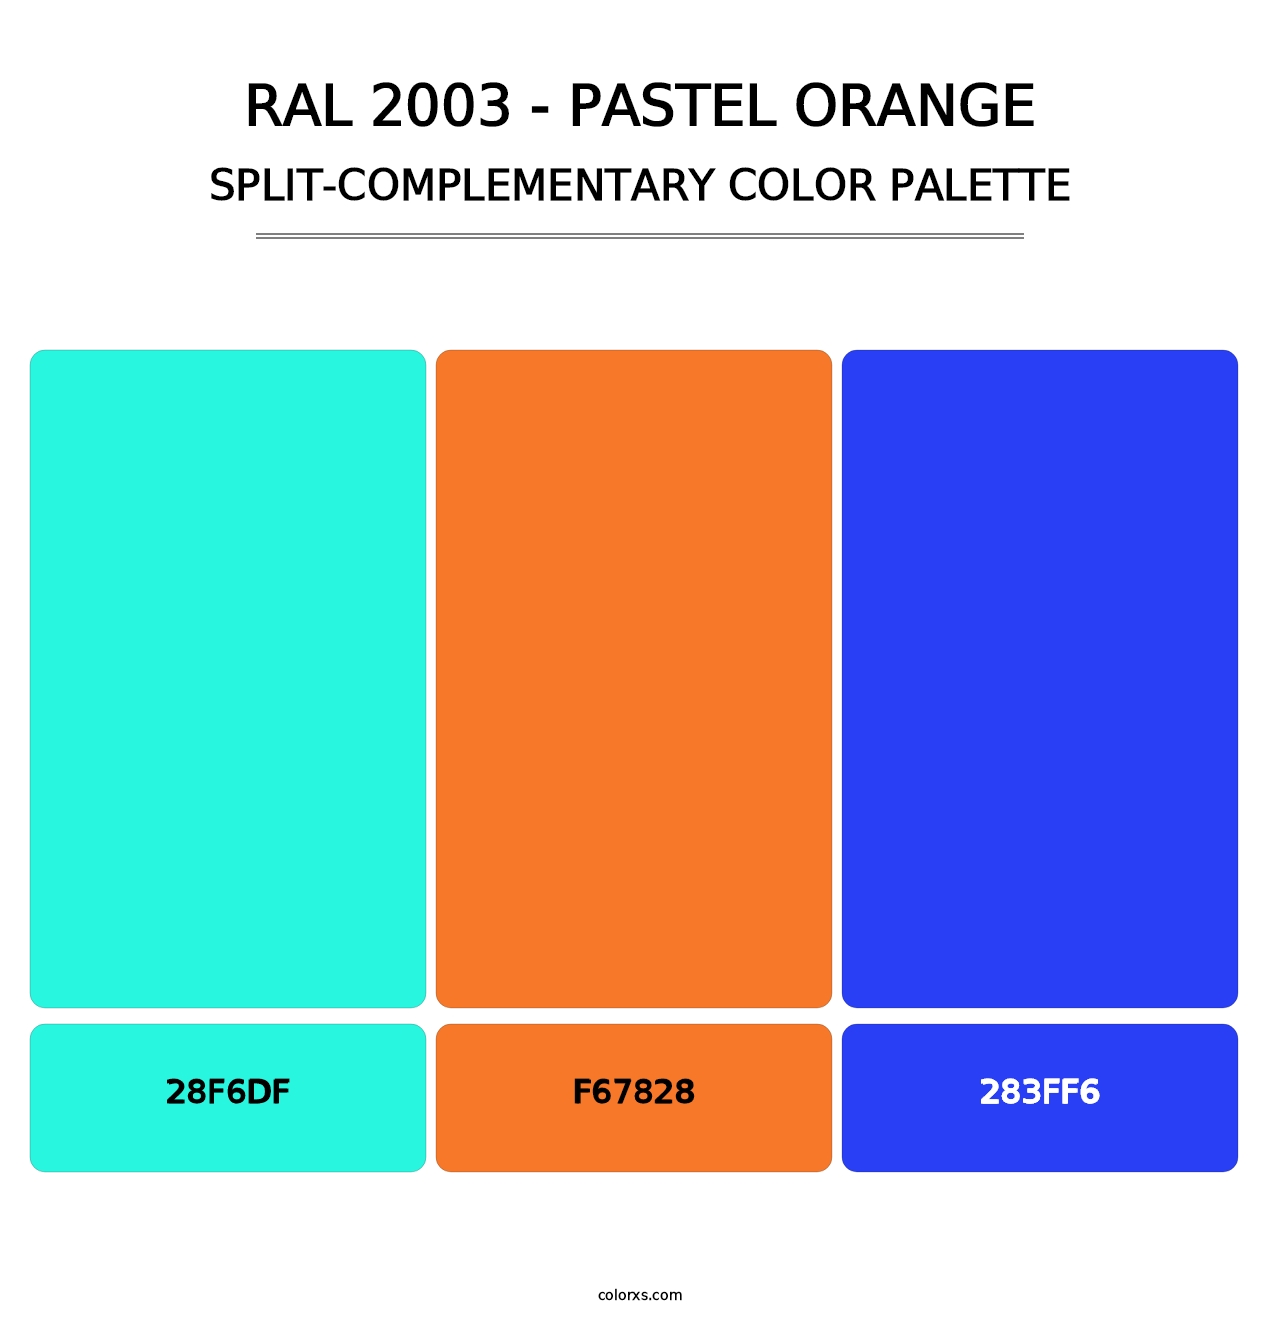 RAL 2003 - Pastel Orange - Split-Complementary Color Palette